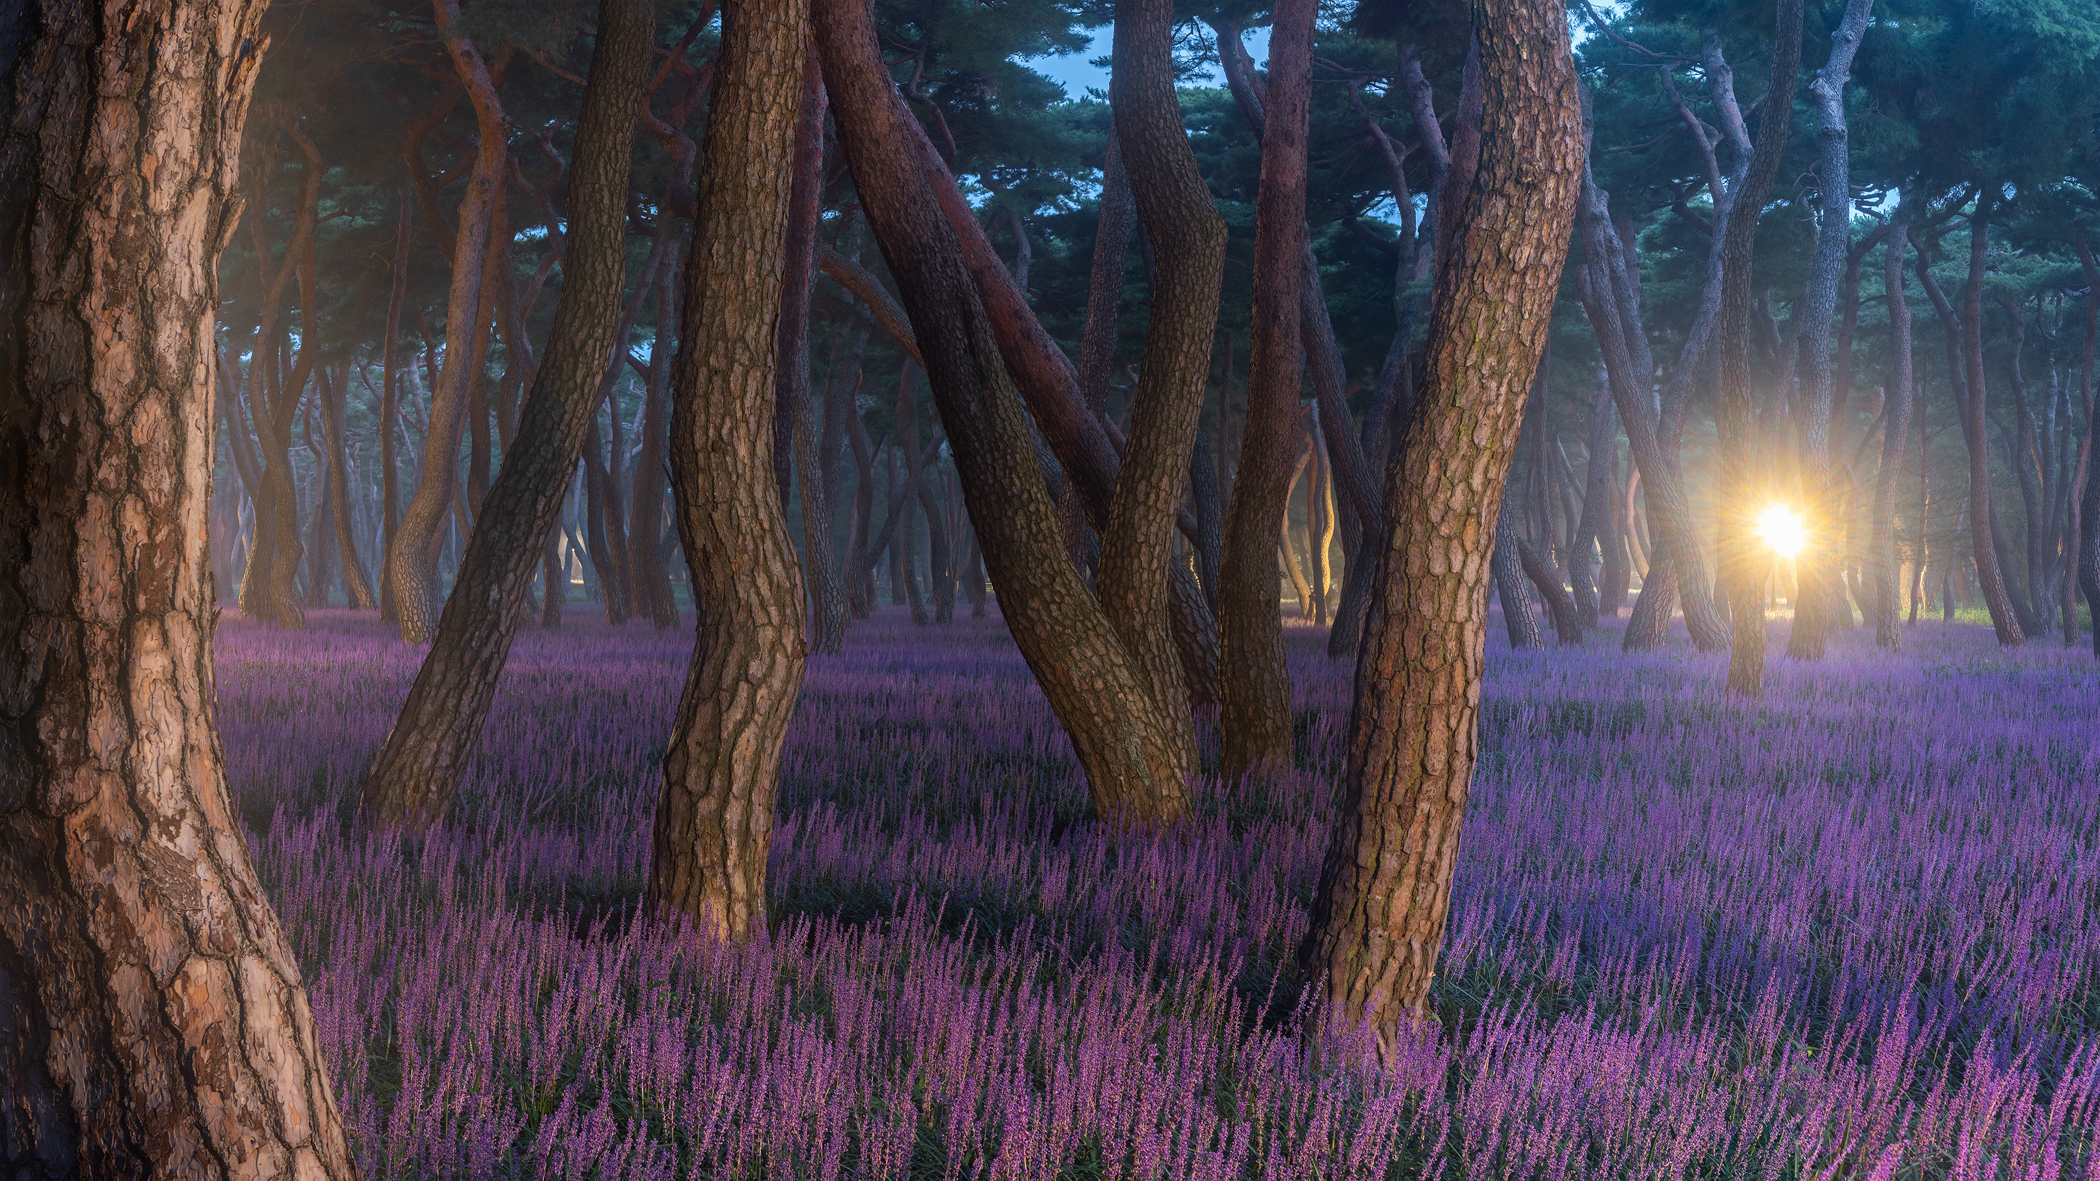 General 2100x1181 Jaeyoun Ryu trees purple bright nature lavender tree bark outdoors plants